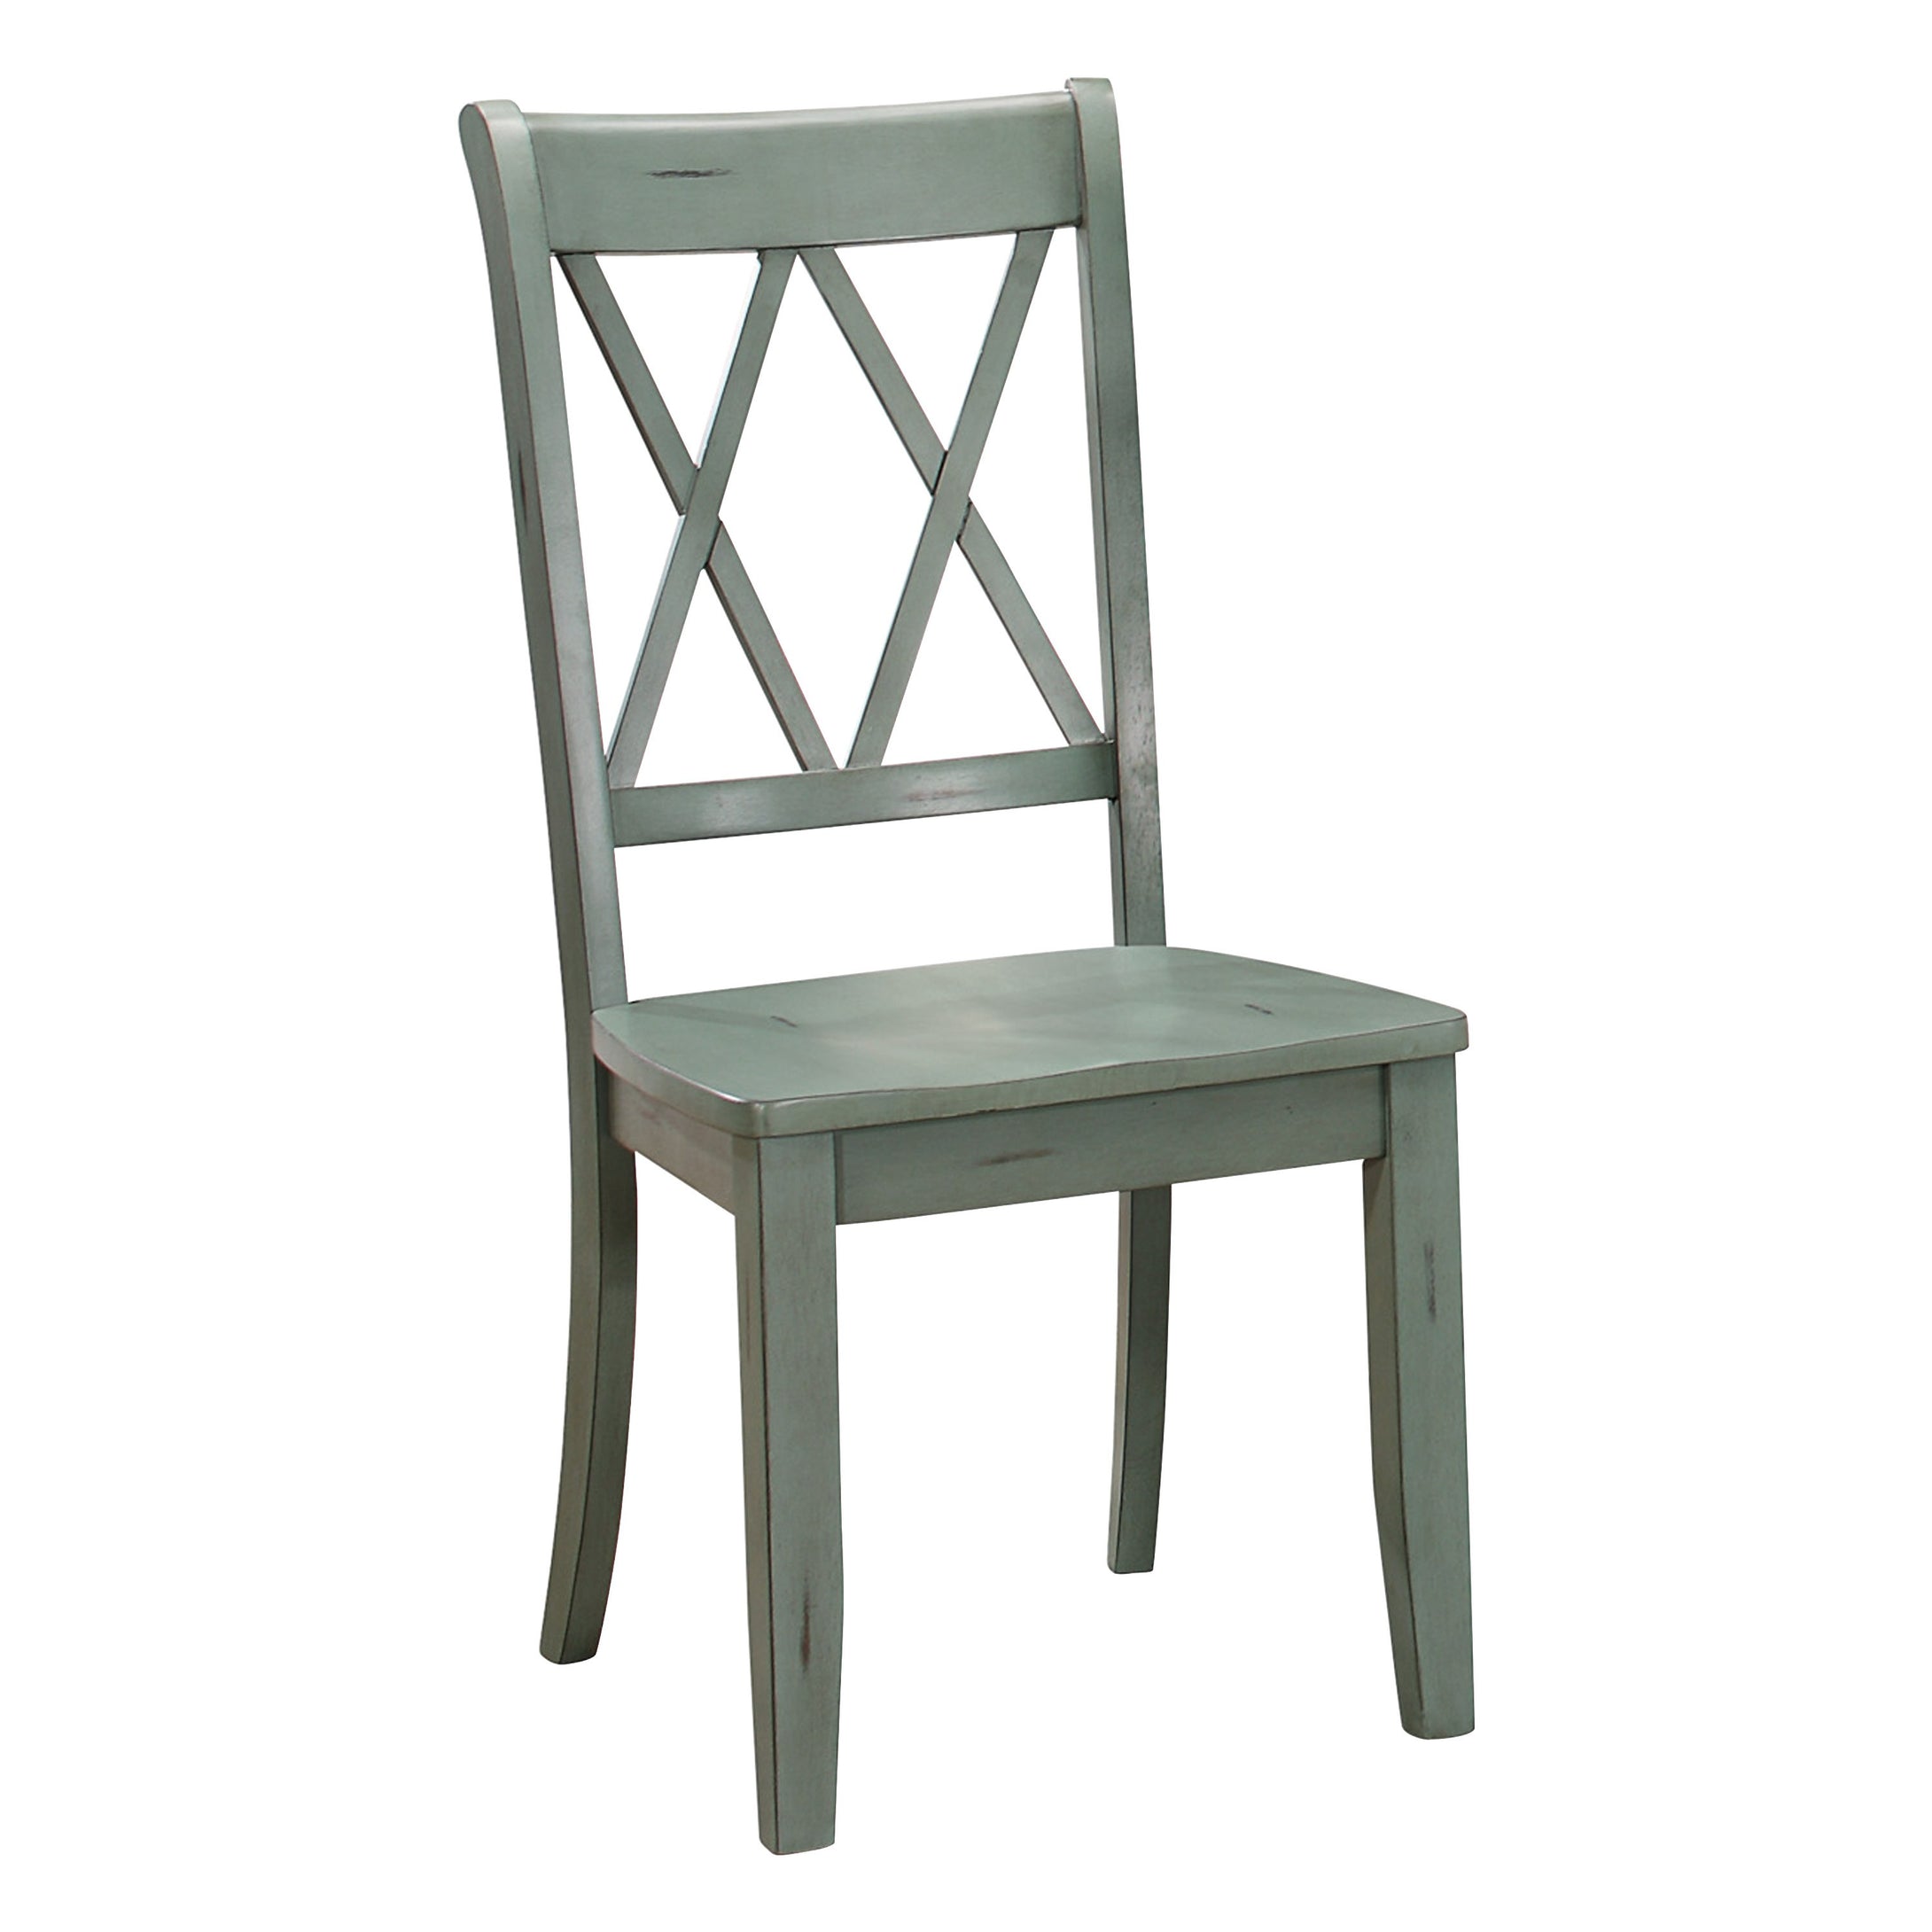 5516TLS Side Chair, Teal